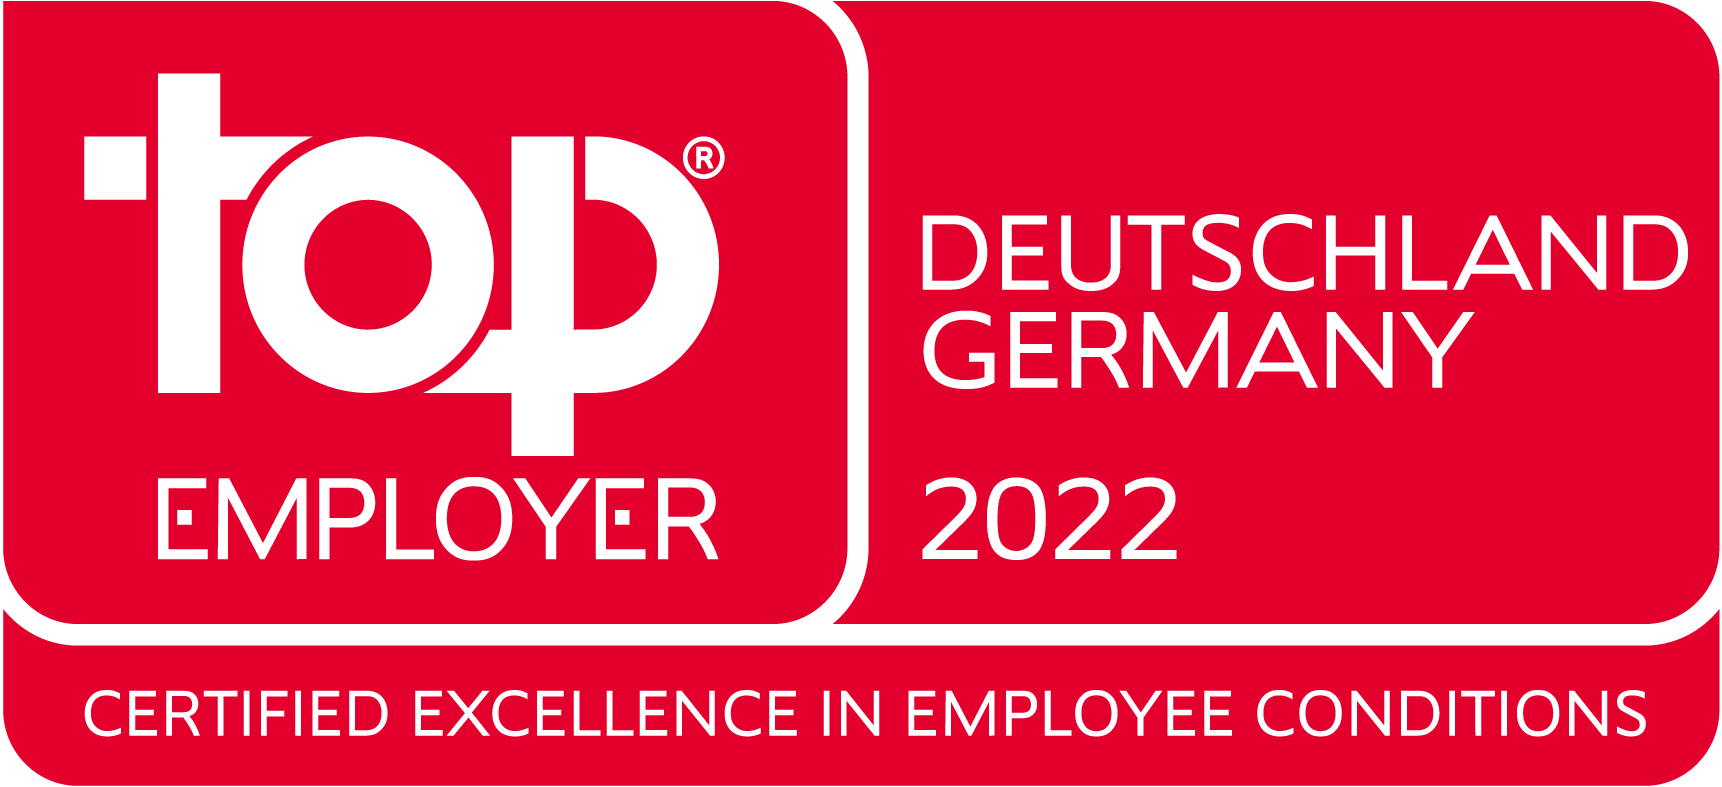 Germany Top Employer 2022 logo